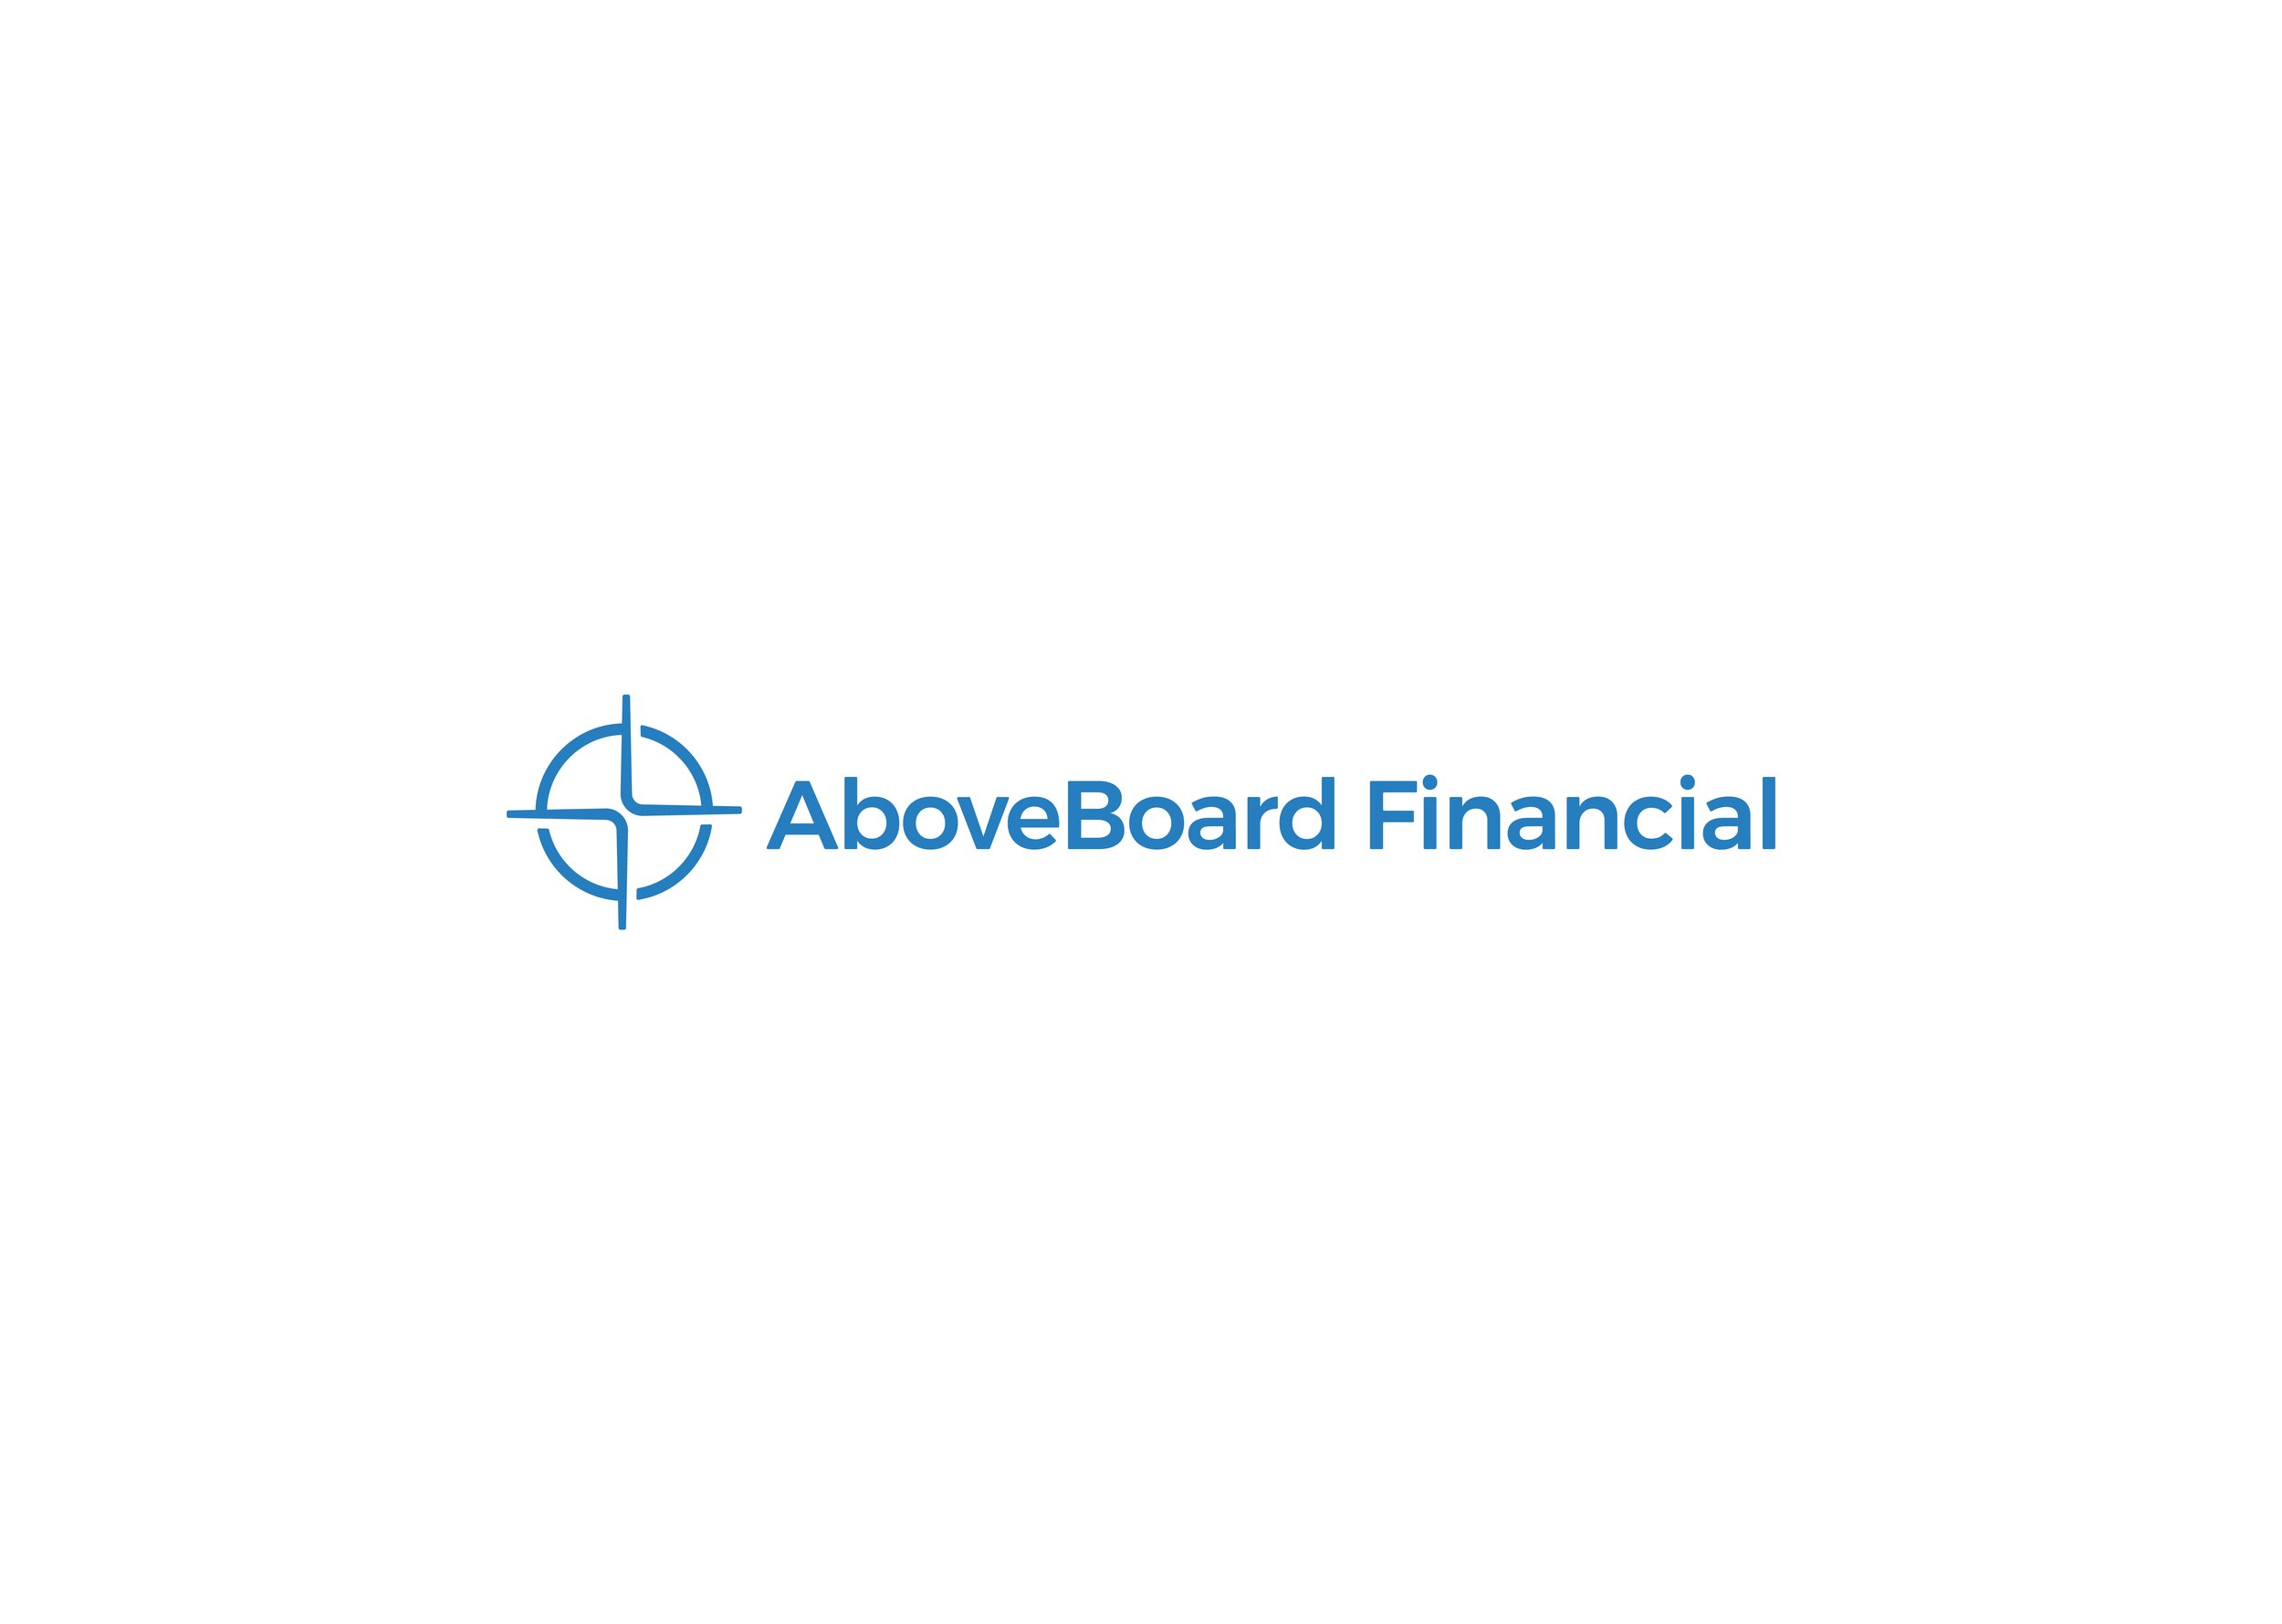 AboveBoard Financial BG Images-01.jpg